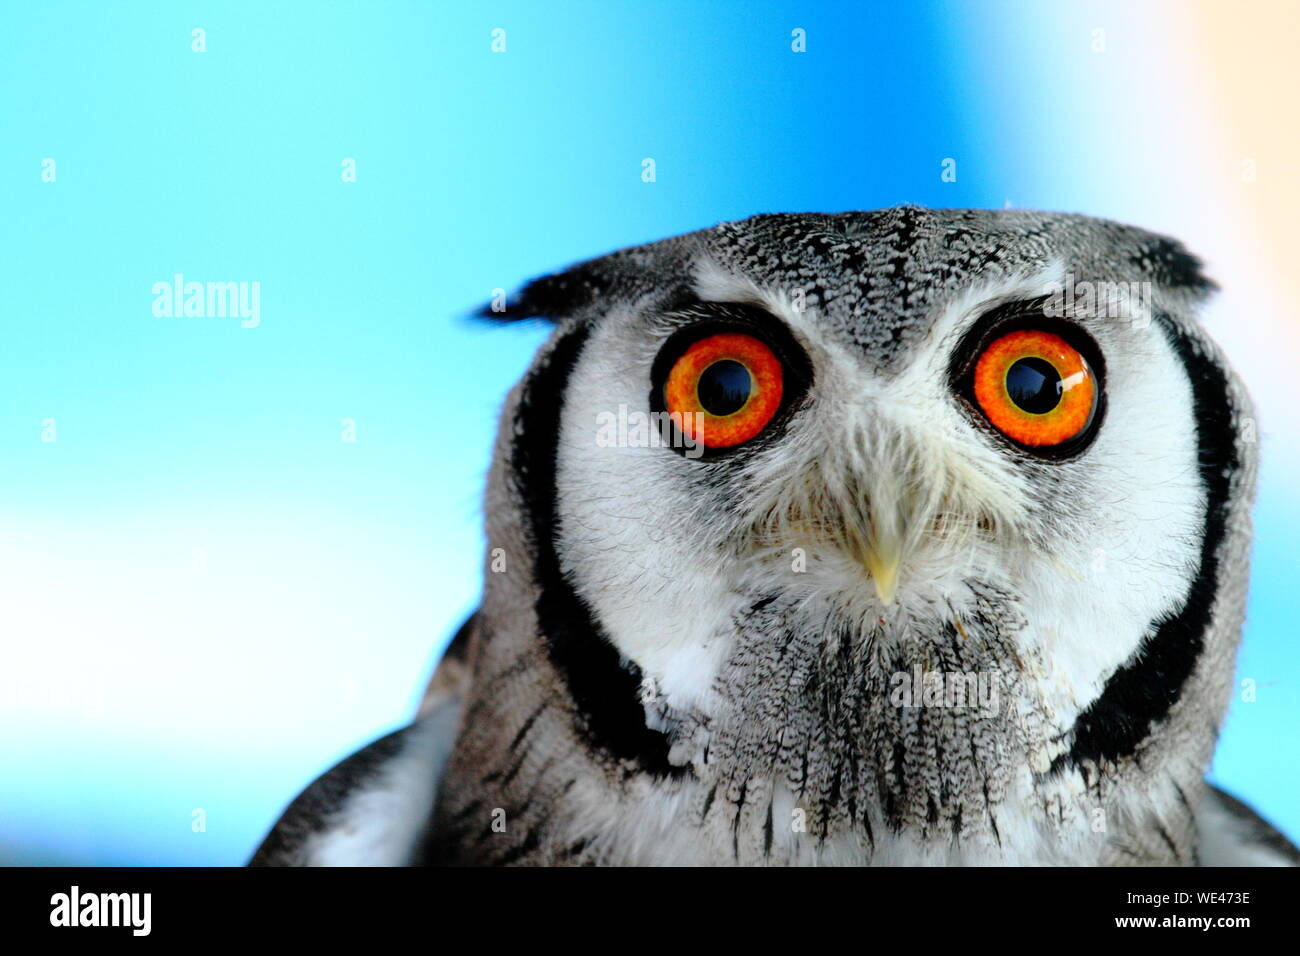 Close-up Headshot Of An Alert Owl Stock Photo